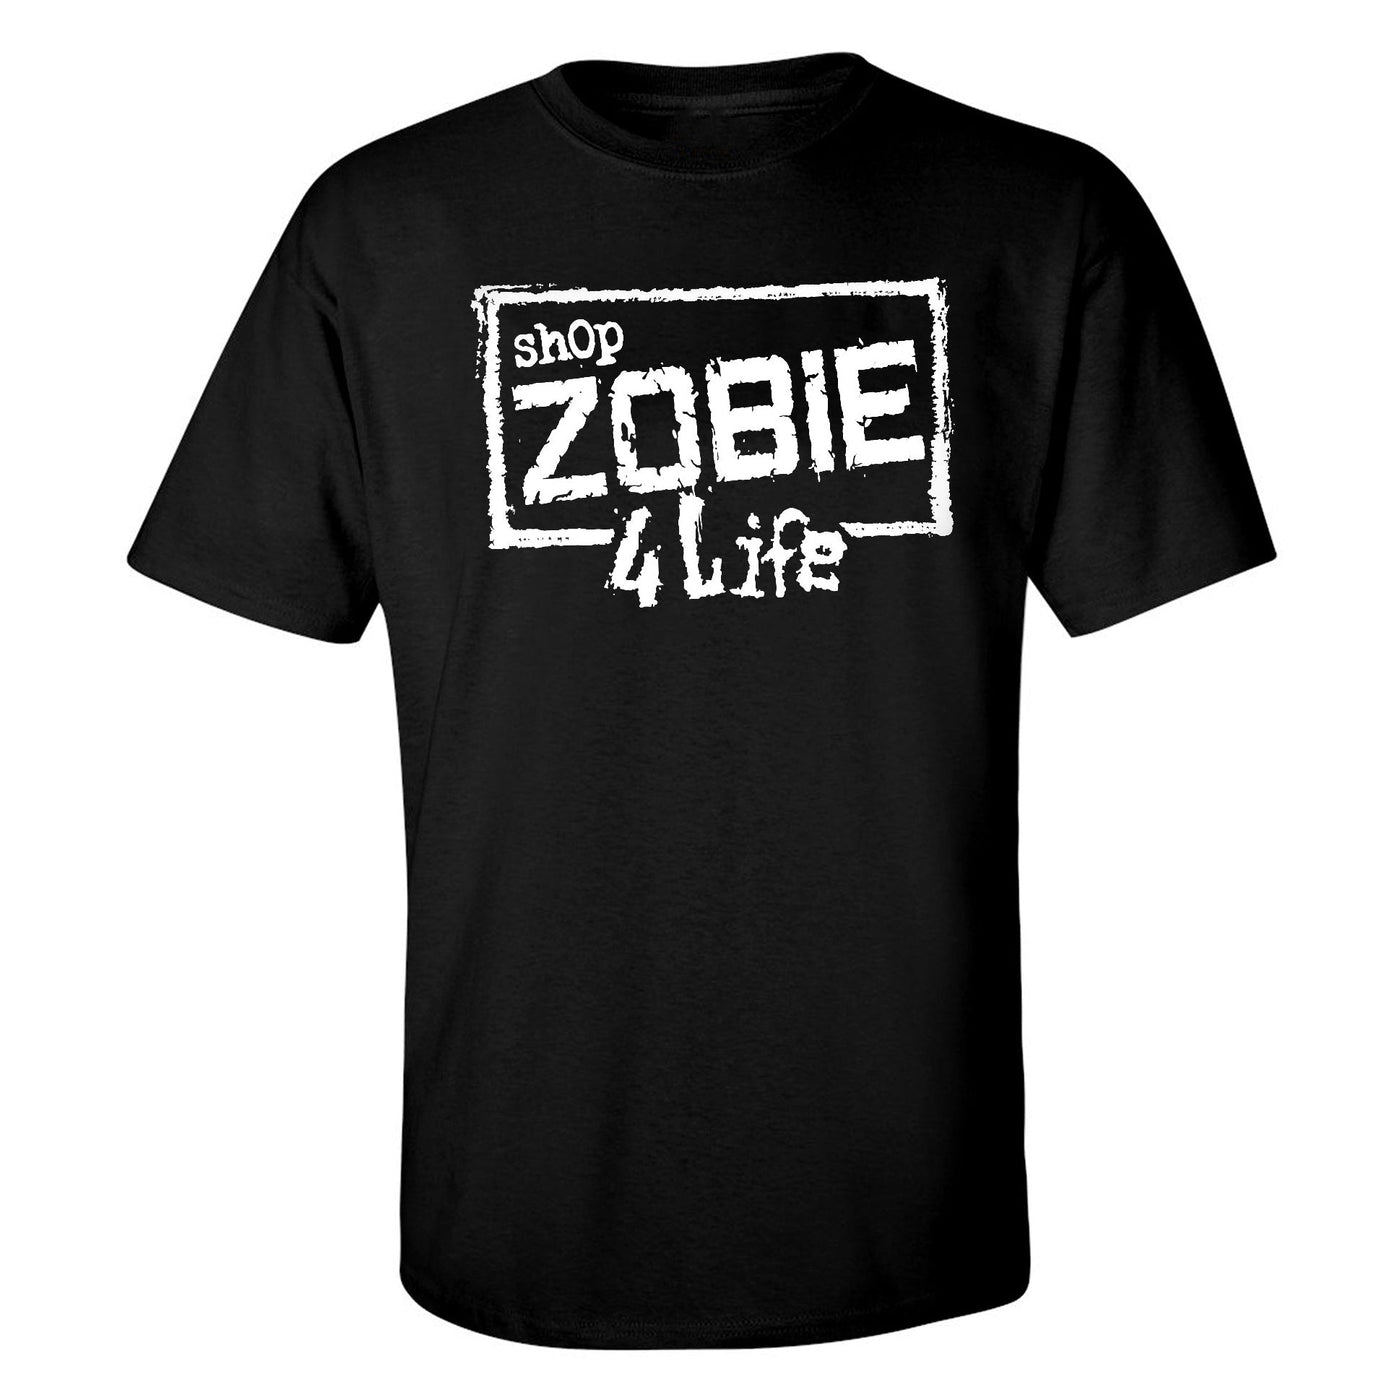 "Shop Zobie 4 Life" Short Sleeve T-Shirt